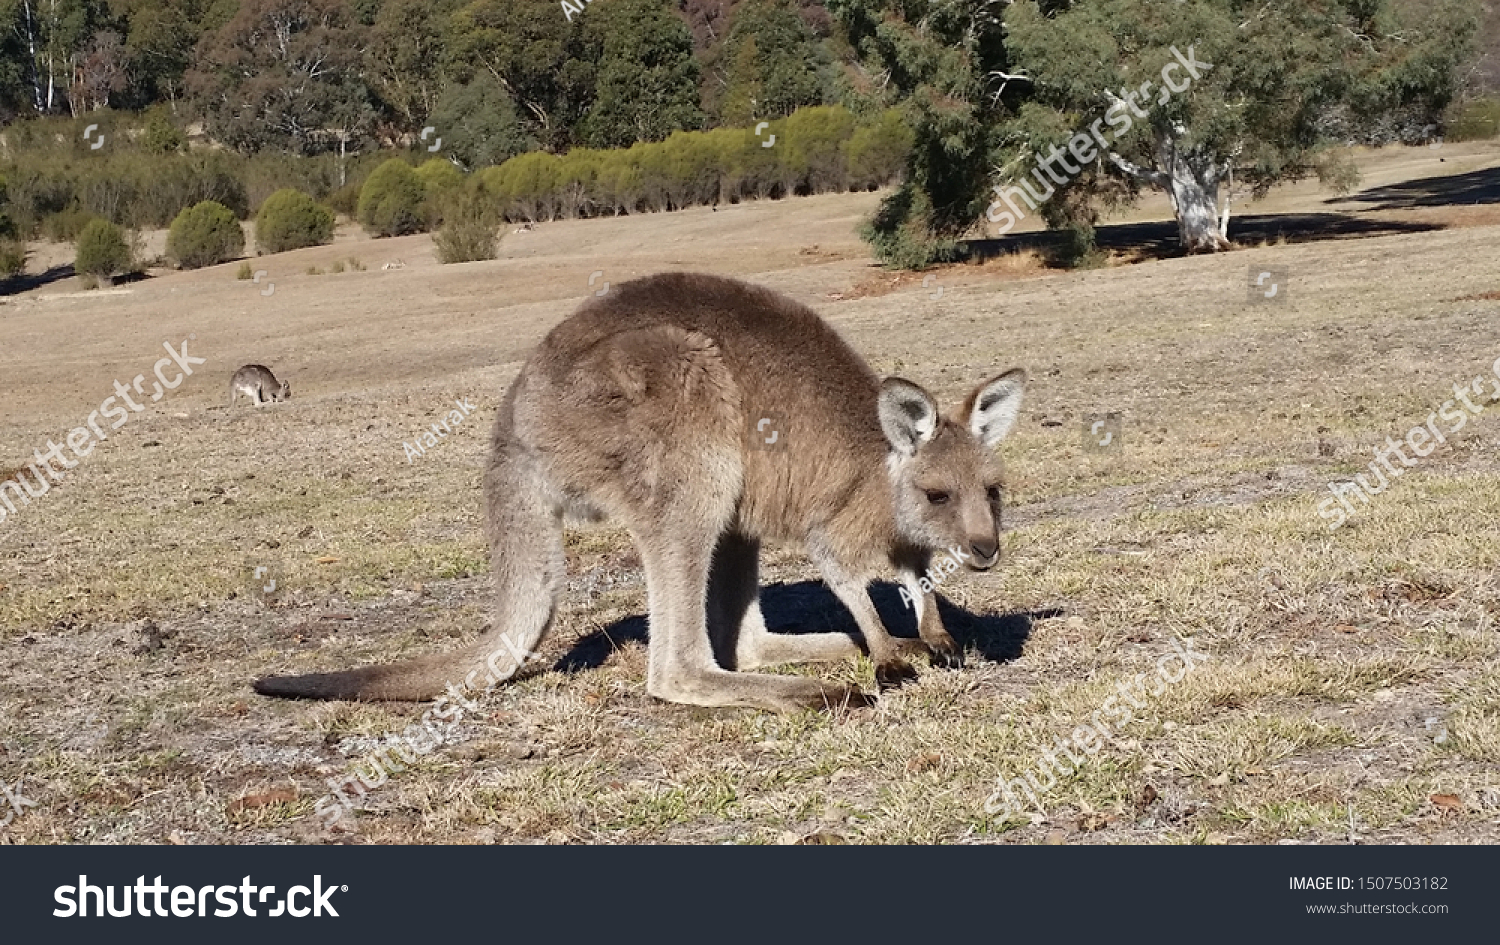 Aussy animals, Australian animals, marsupial animals #1507503182